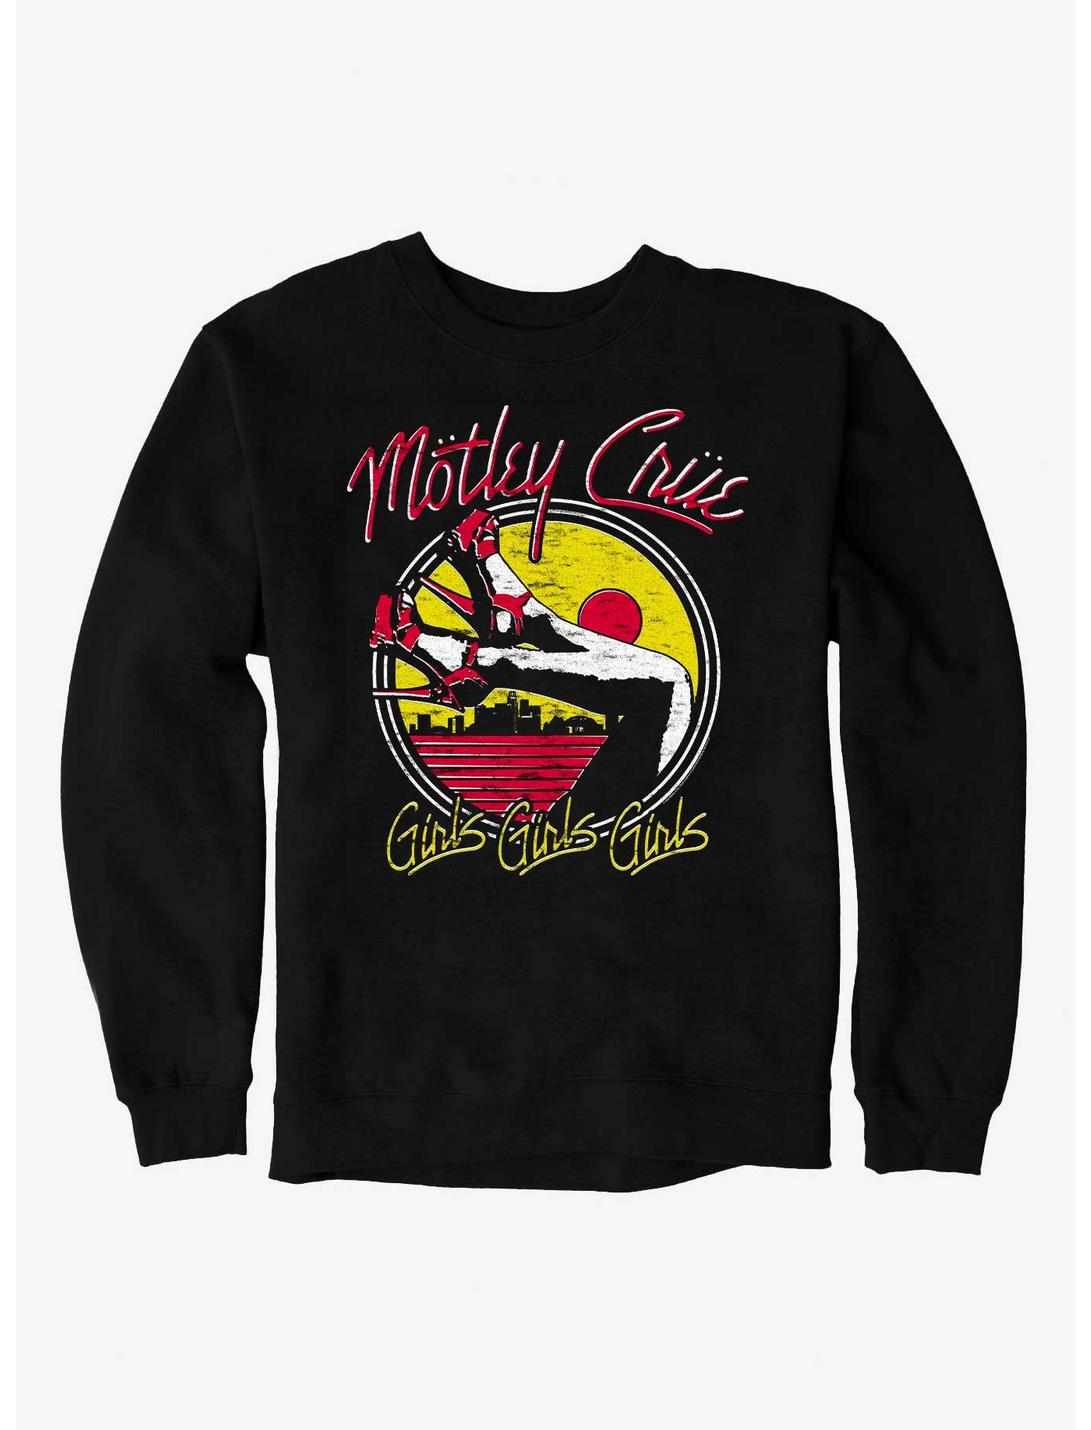 Motley Crue Girls Girls Girls Sweatshirt, BLACK, hi-res